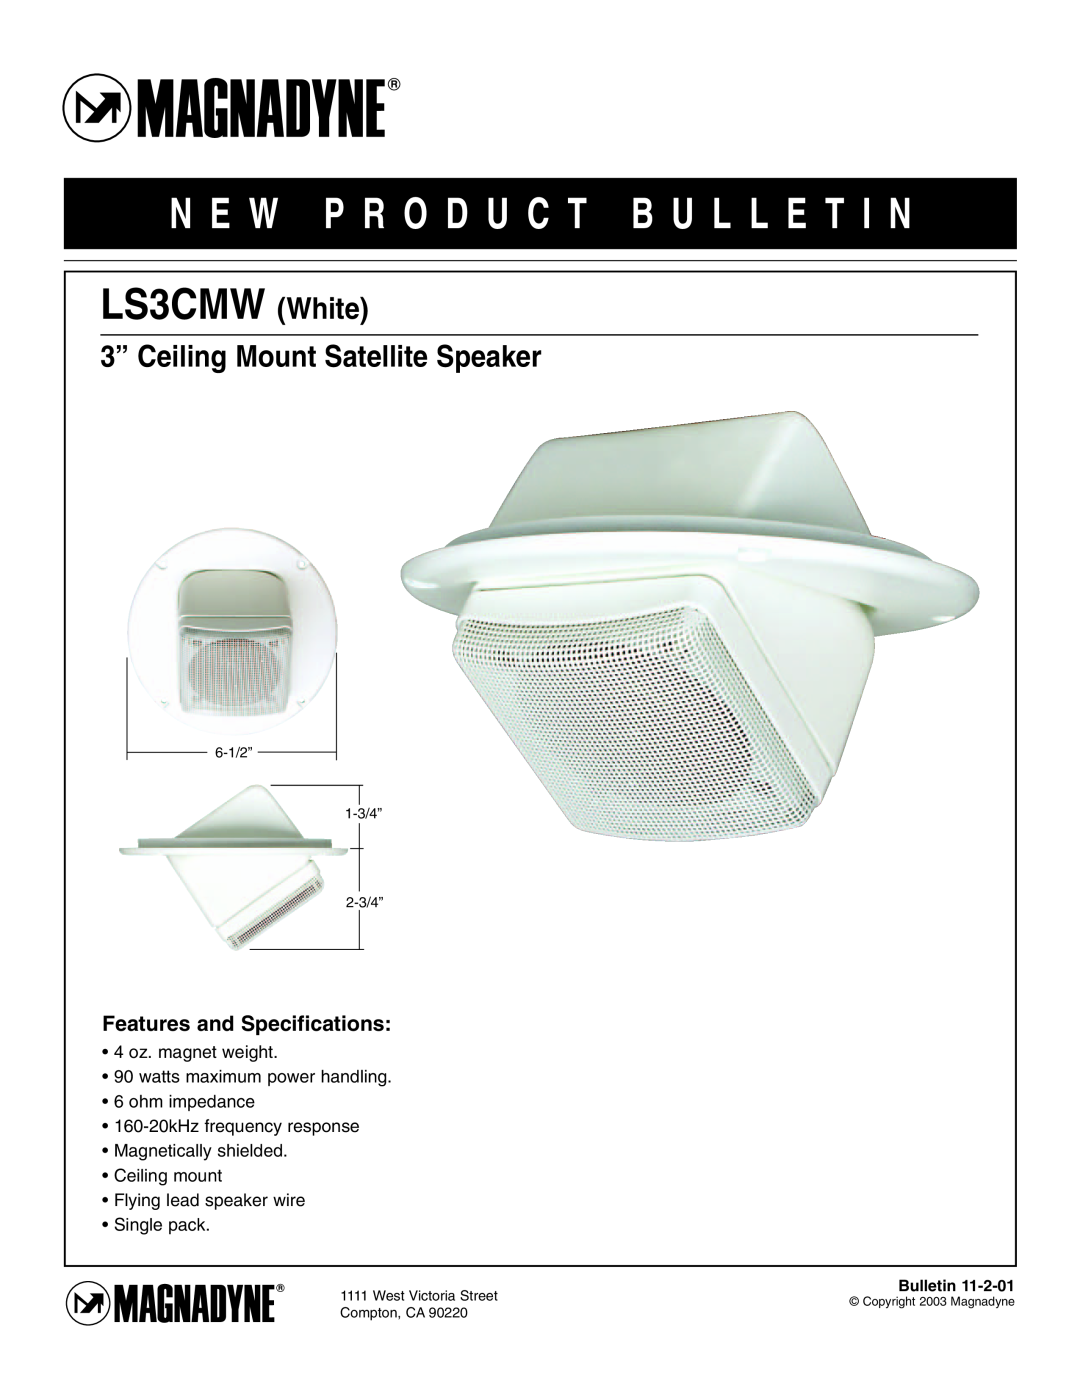 Magnadyne specifications N E W P R O D U C T B U L L E T I N, LS3CMW White, 3” Ceiling Mount Satellite Speaker 